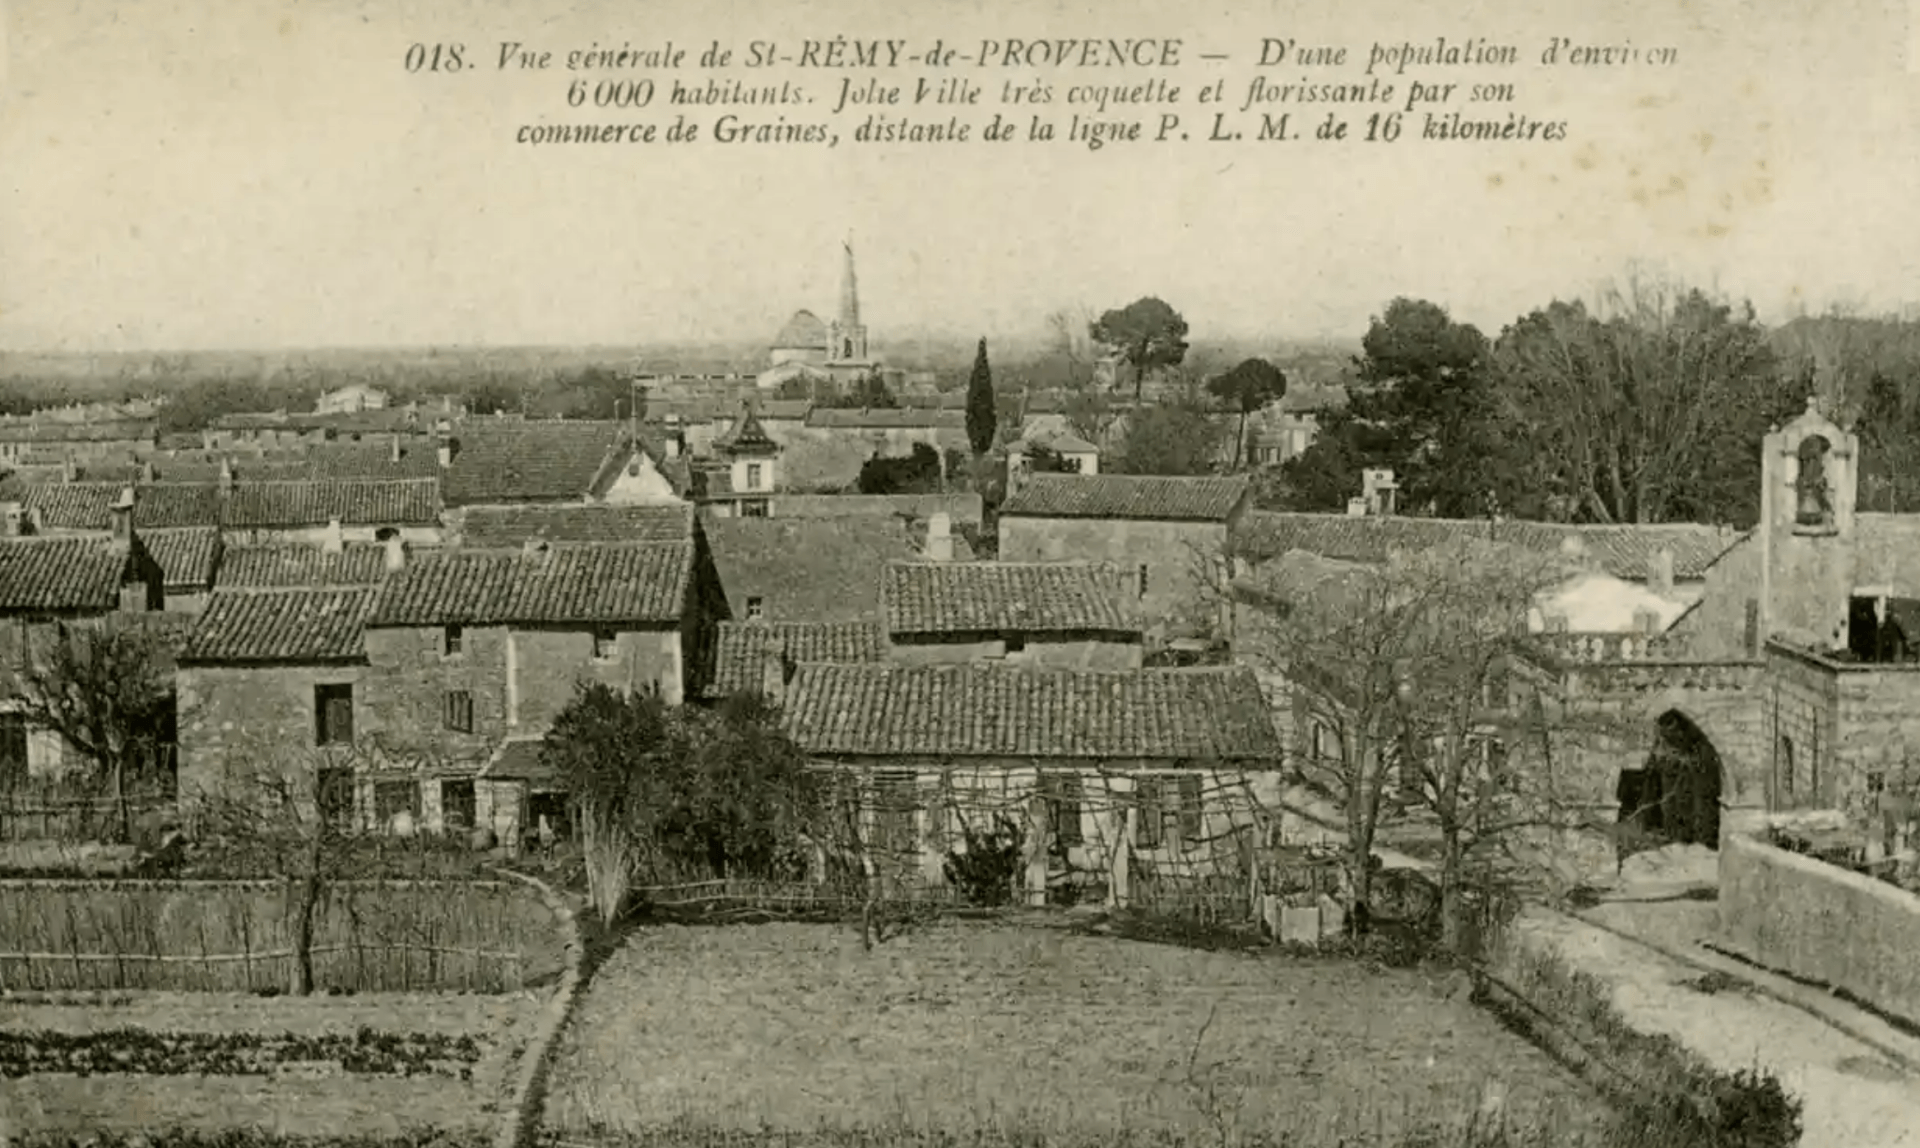 A postcard showing the town of Saint-Rémy-de-Provence, where the asylum was located. Photograph: Quarto Press